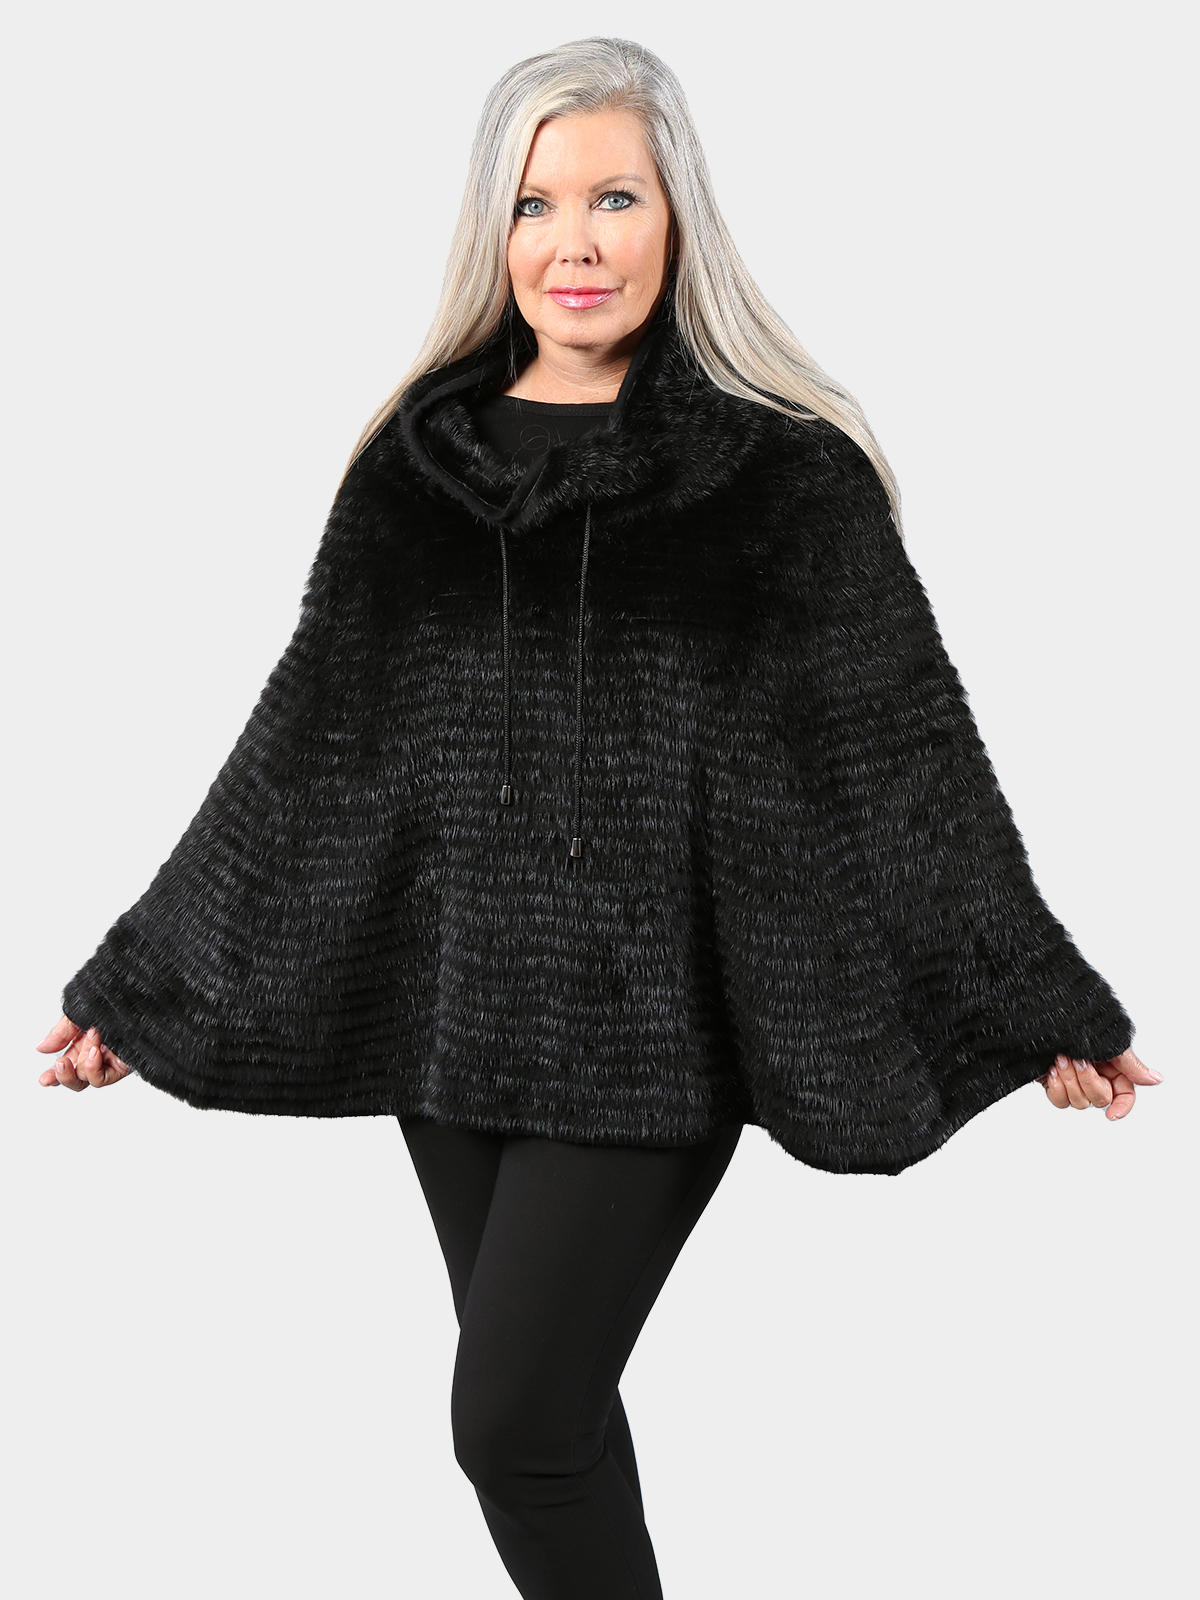 Women's Mink Fur Poncho w/ Black Cashmere Lining - Estate Furs